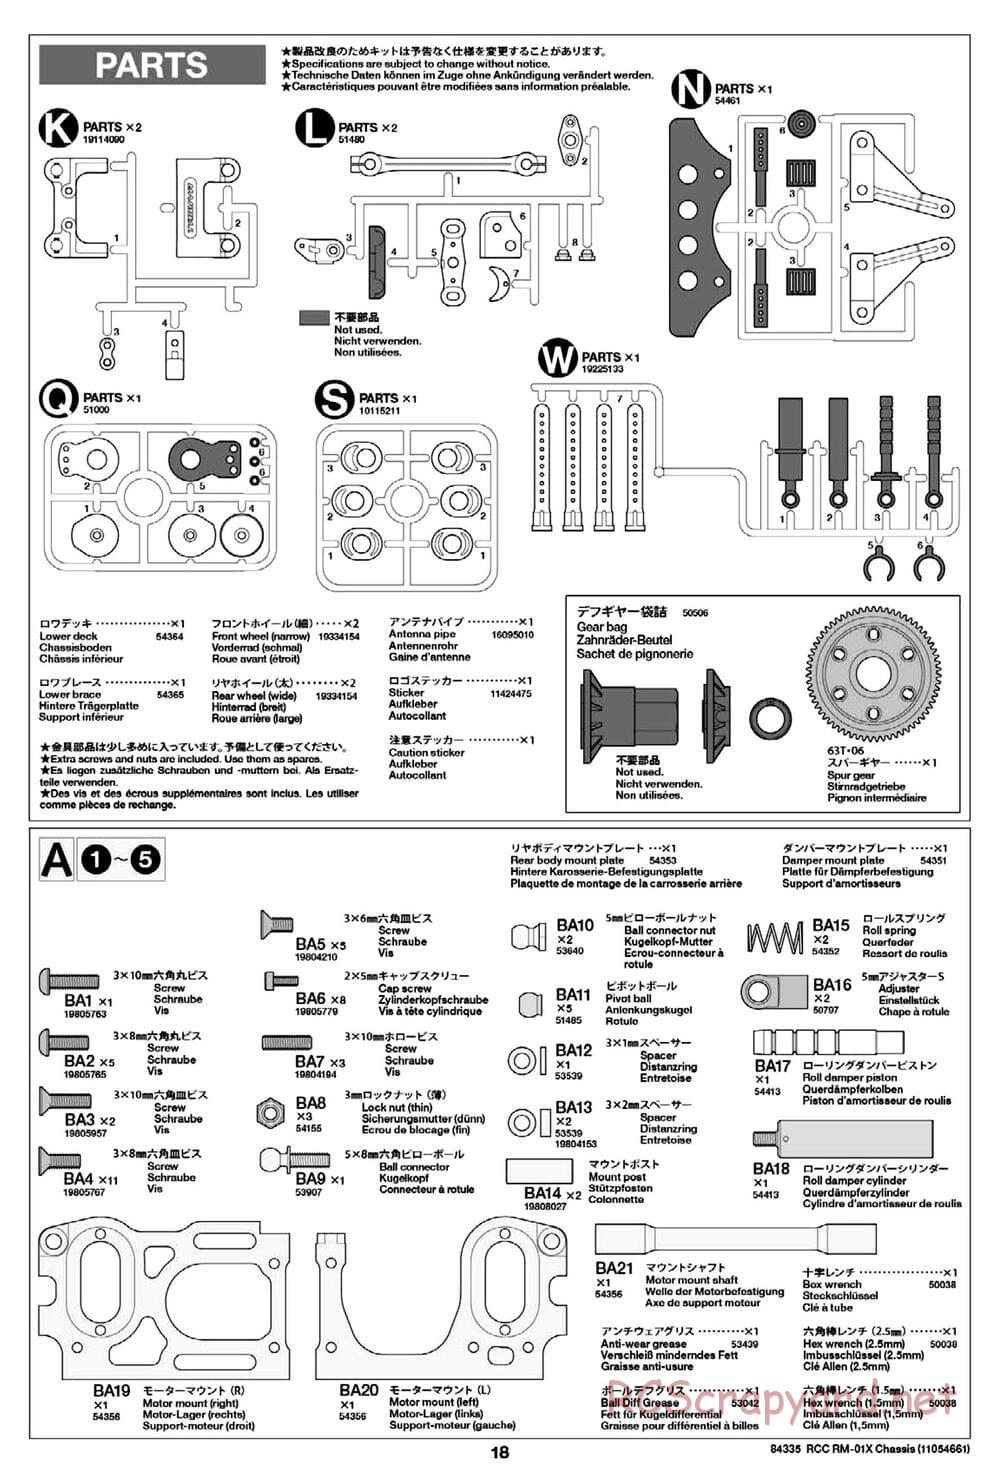 Tamiya - RM-01X Chassis - Manual - Page 18